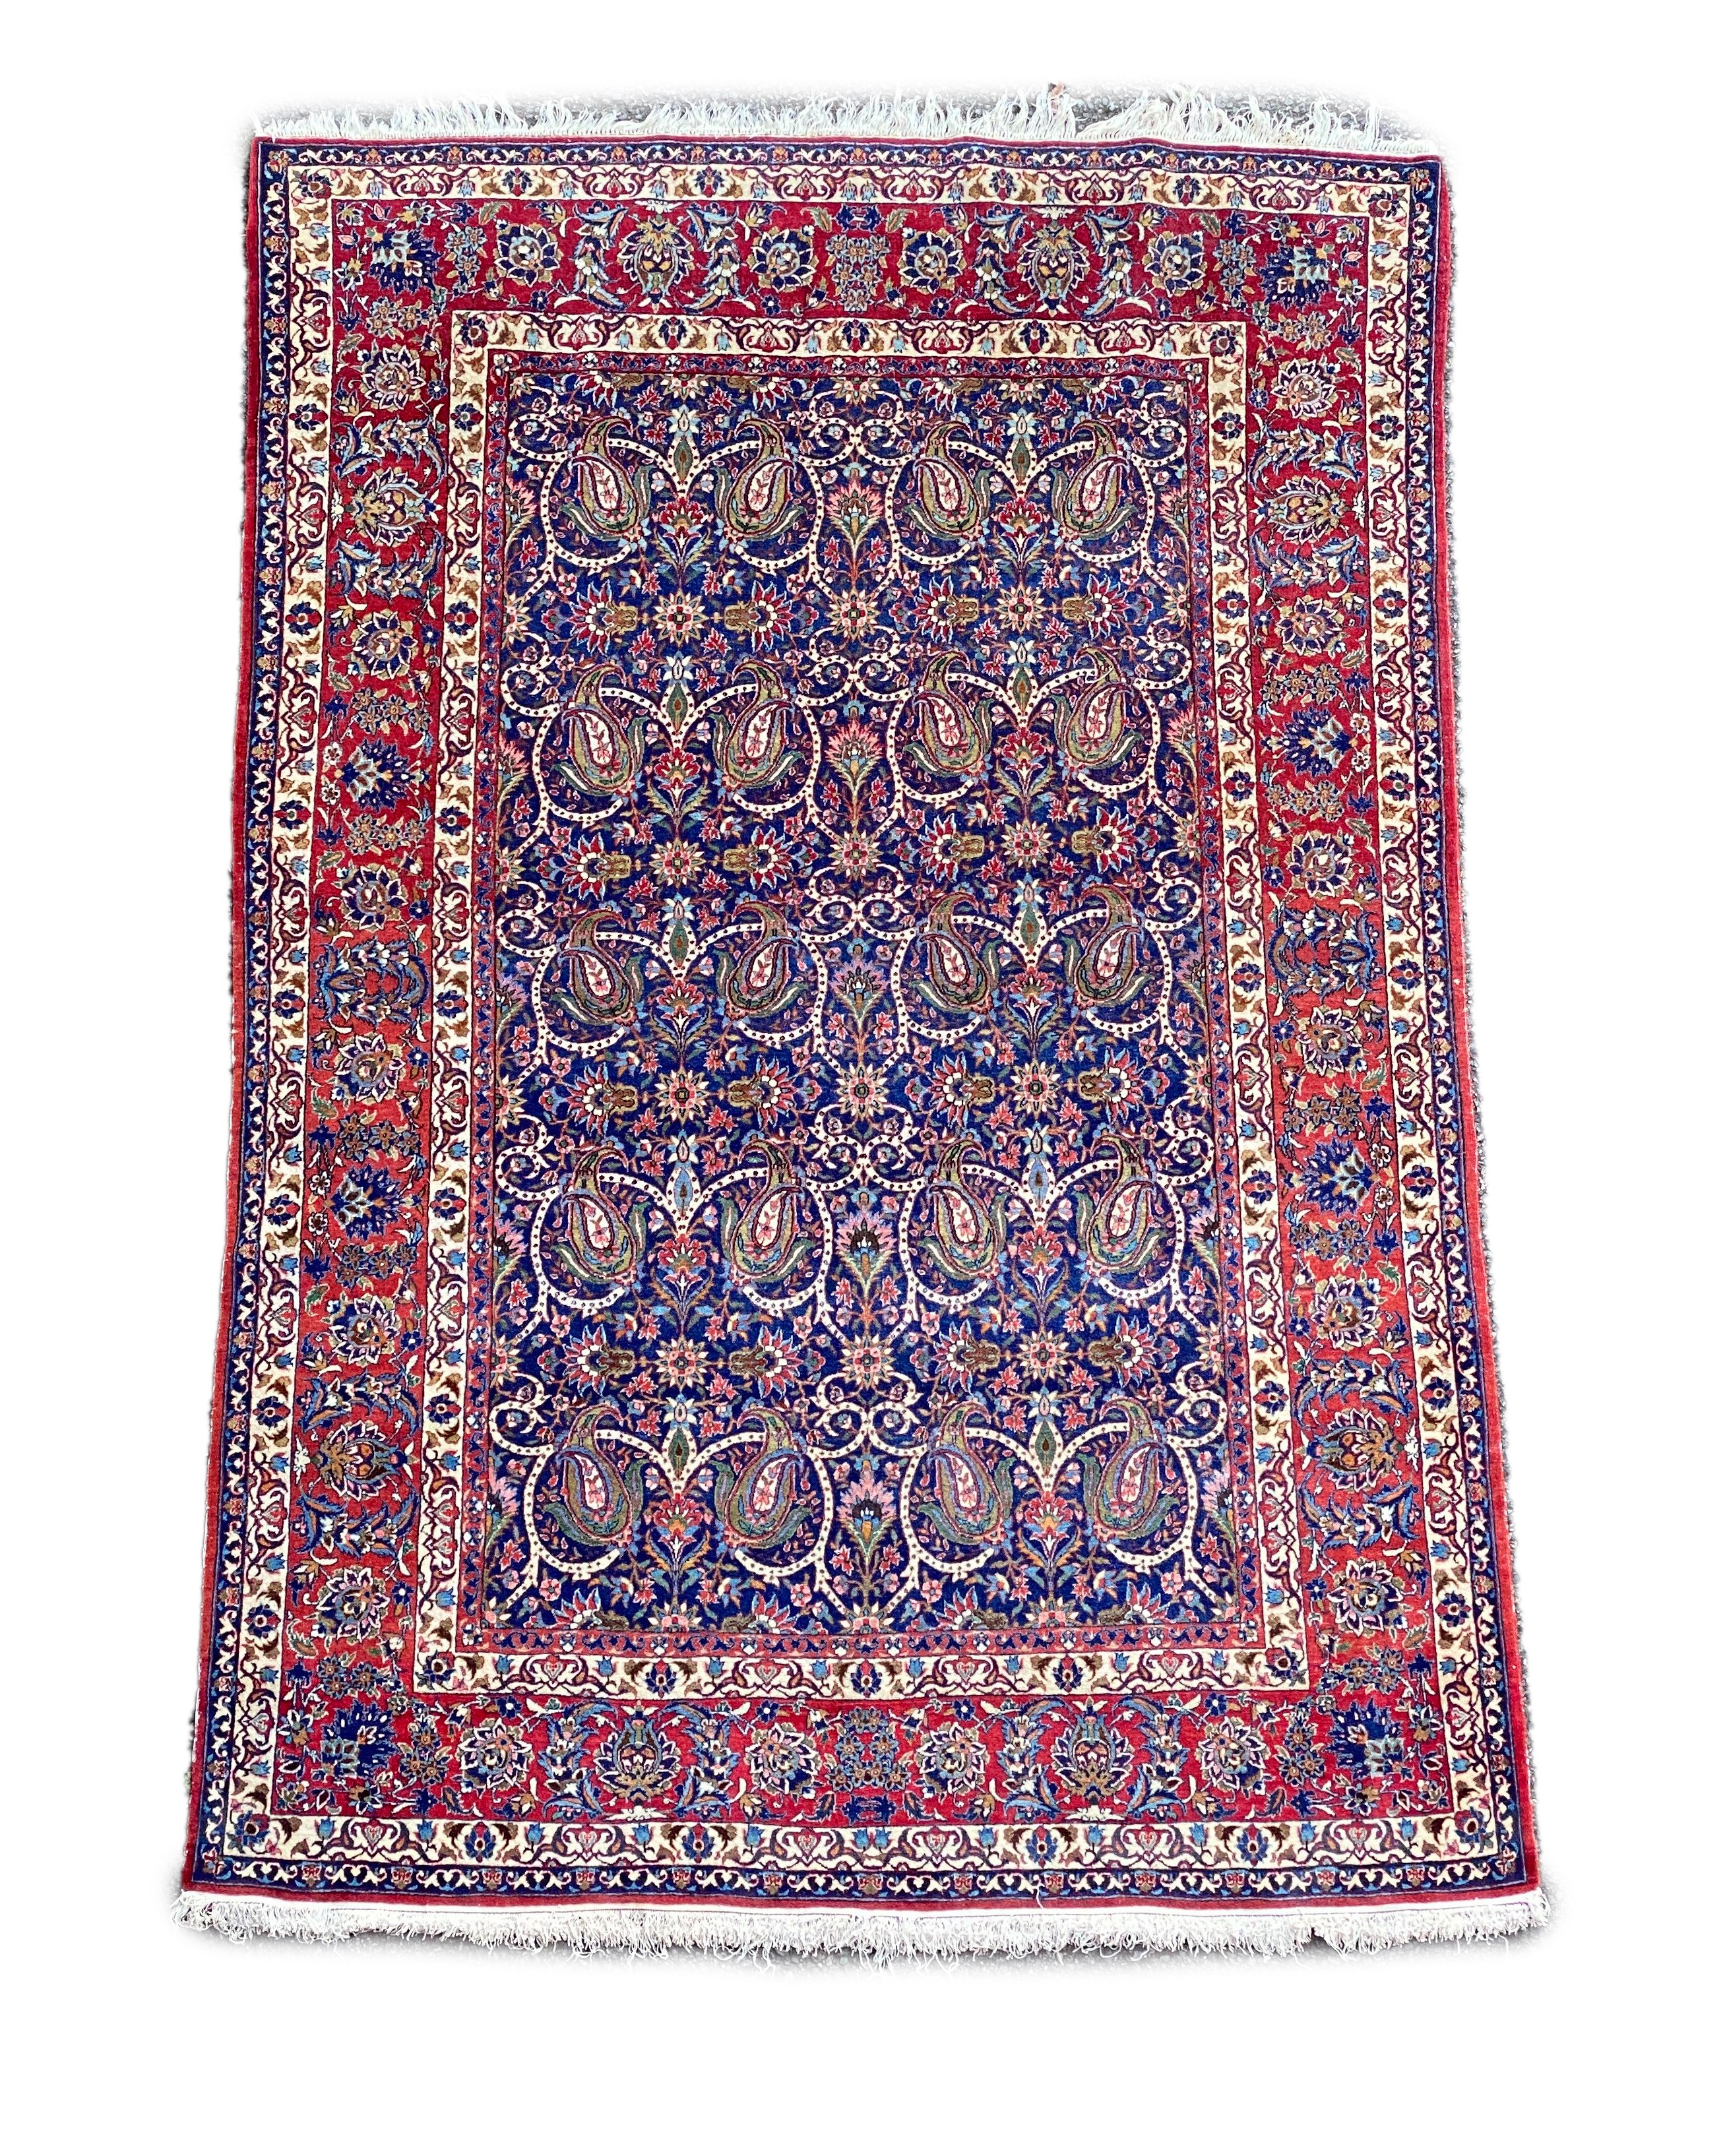 A Tabriz blue ground rug, first half 20th century, 225 cm x 155 cm